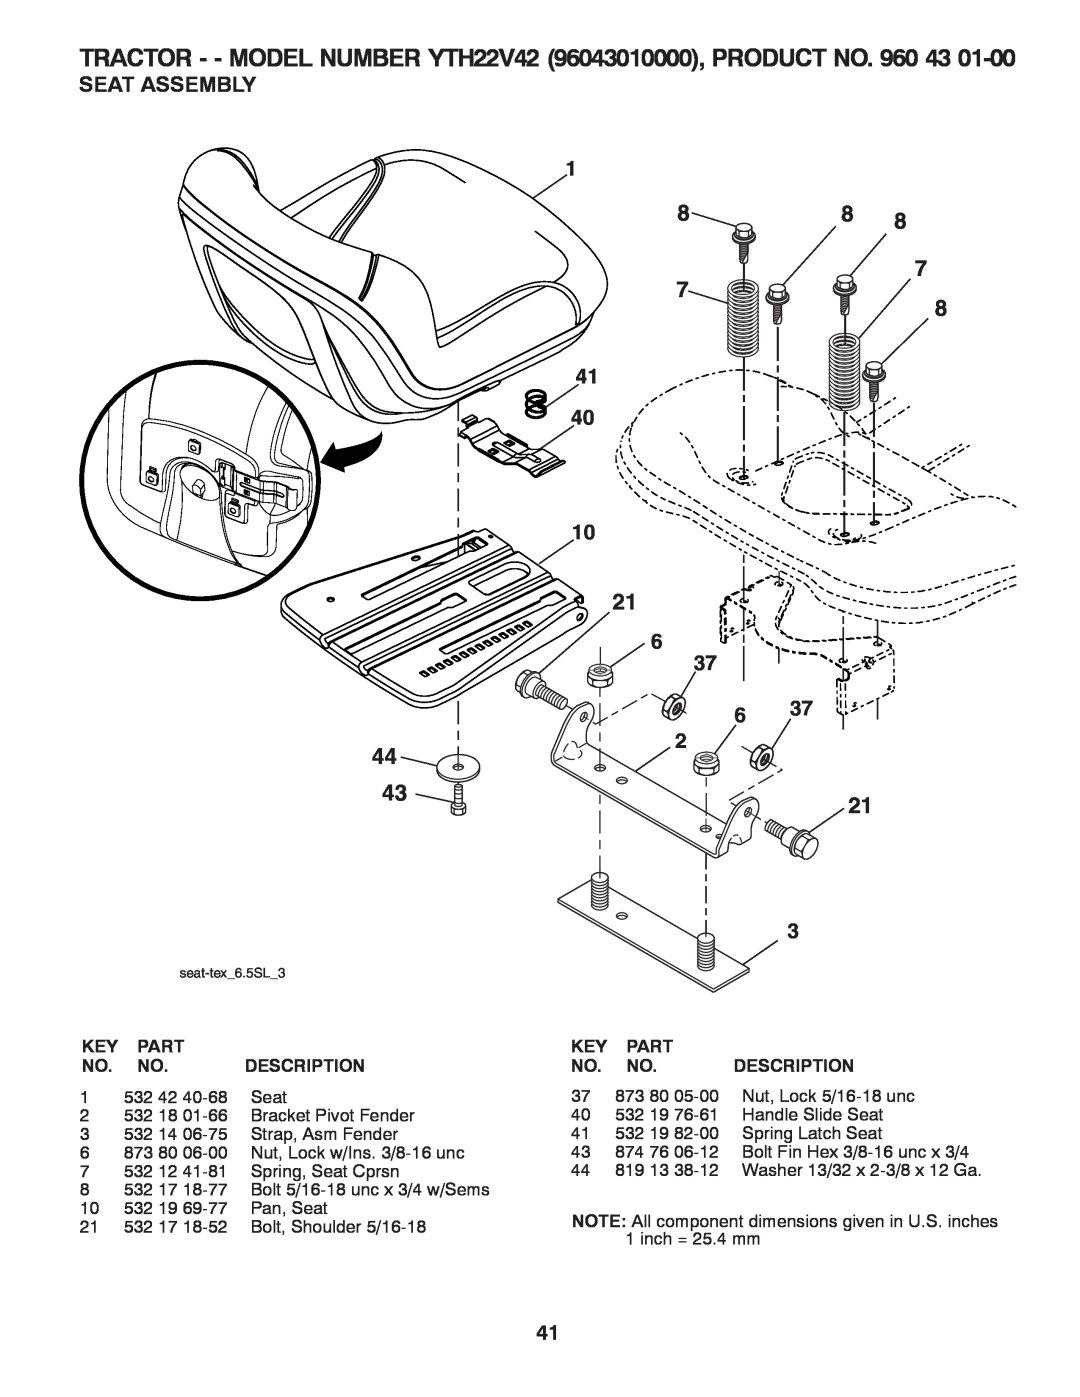 Husqvarna 960430173 owner manual Seat Assembly, 6 37, Part, Description, 532 